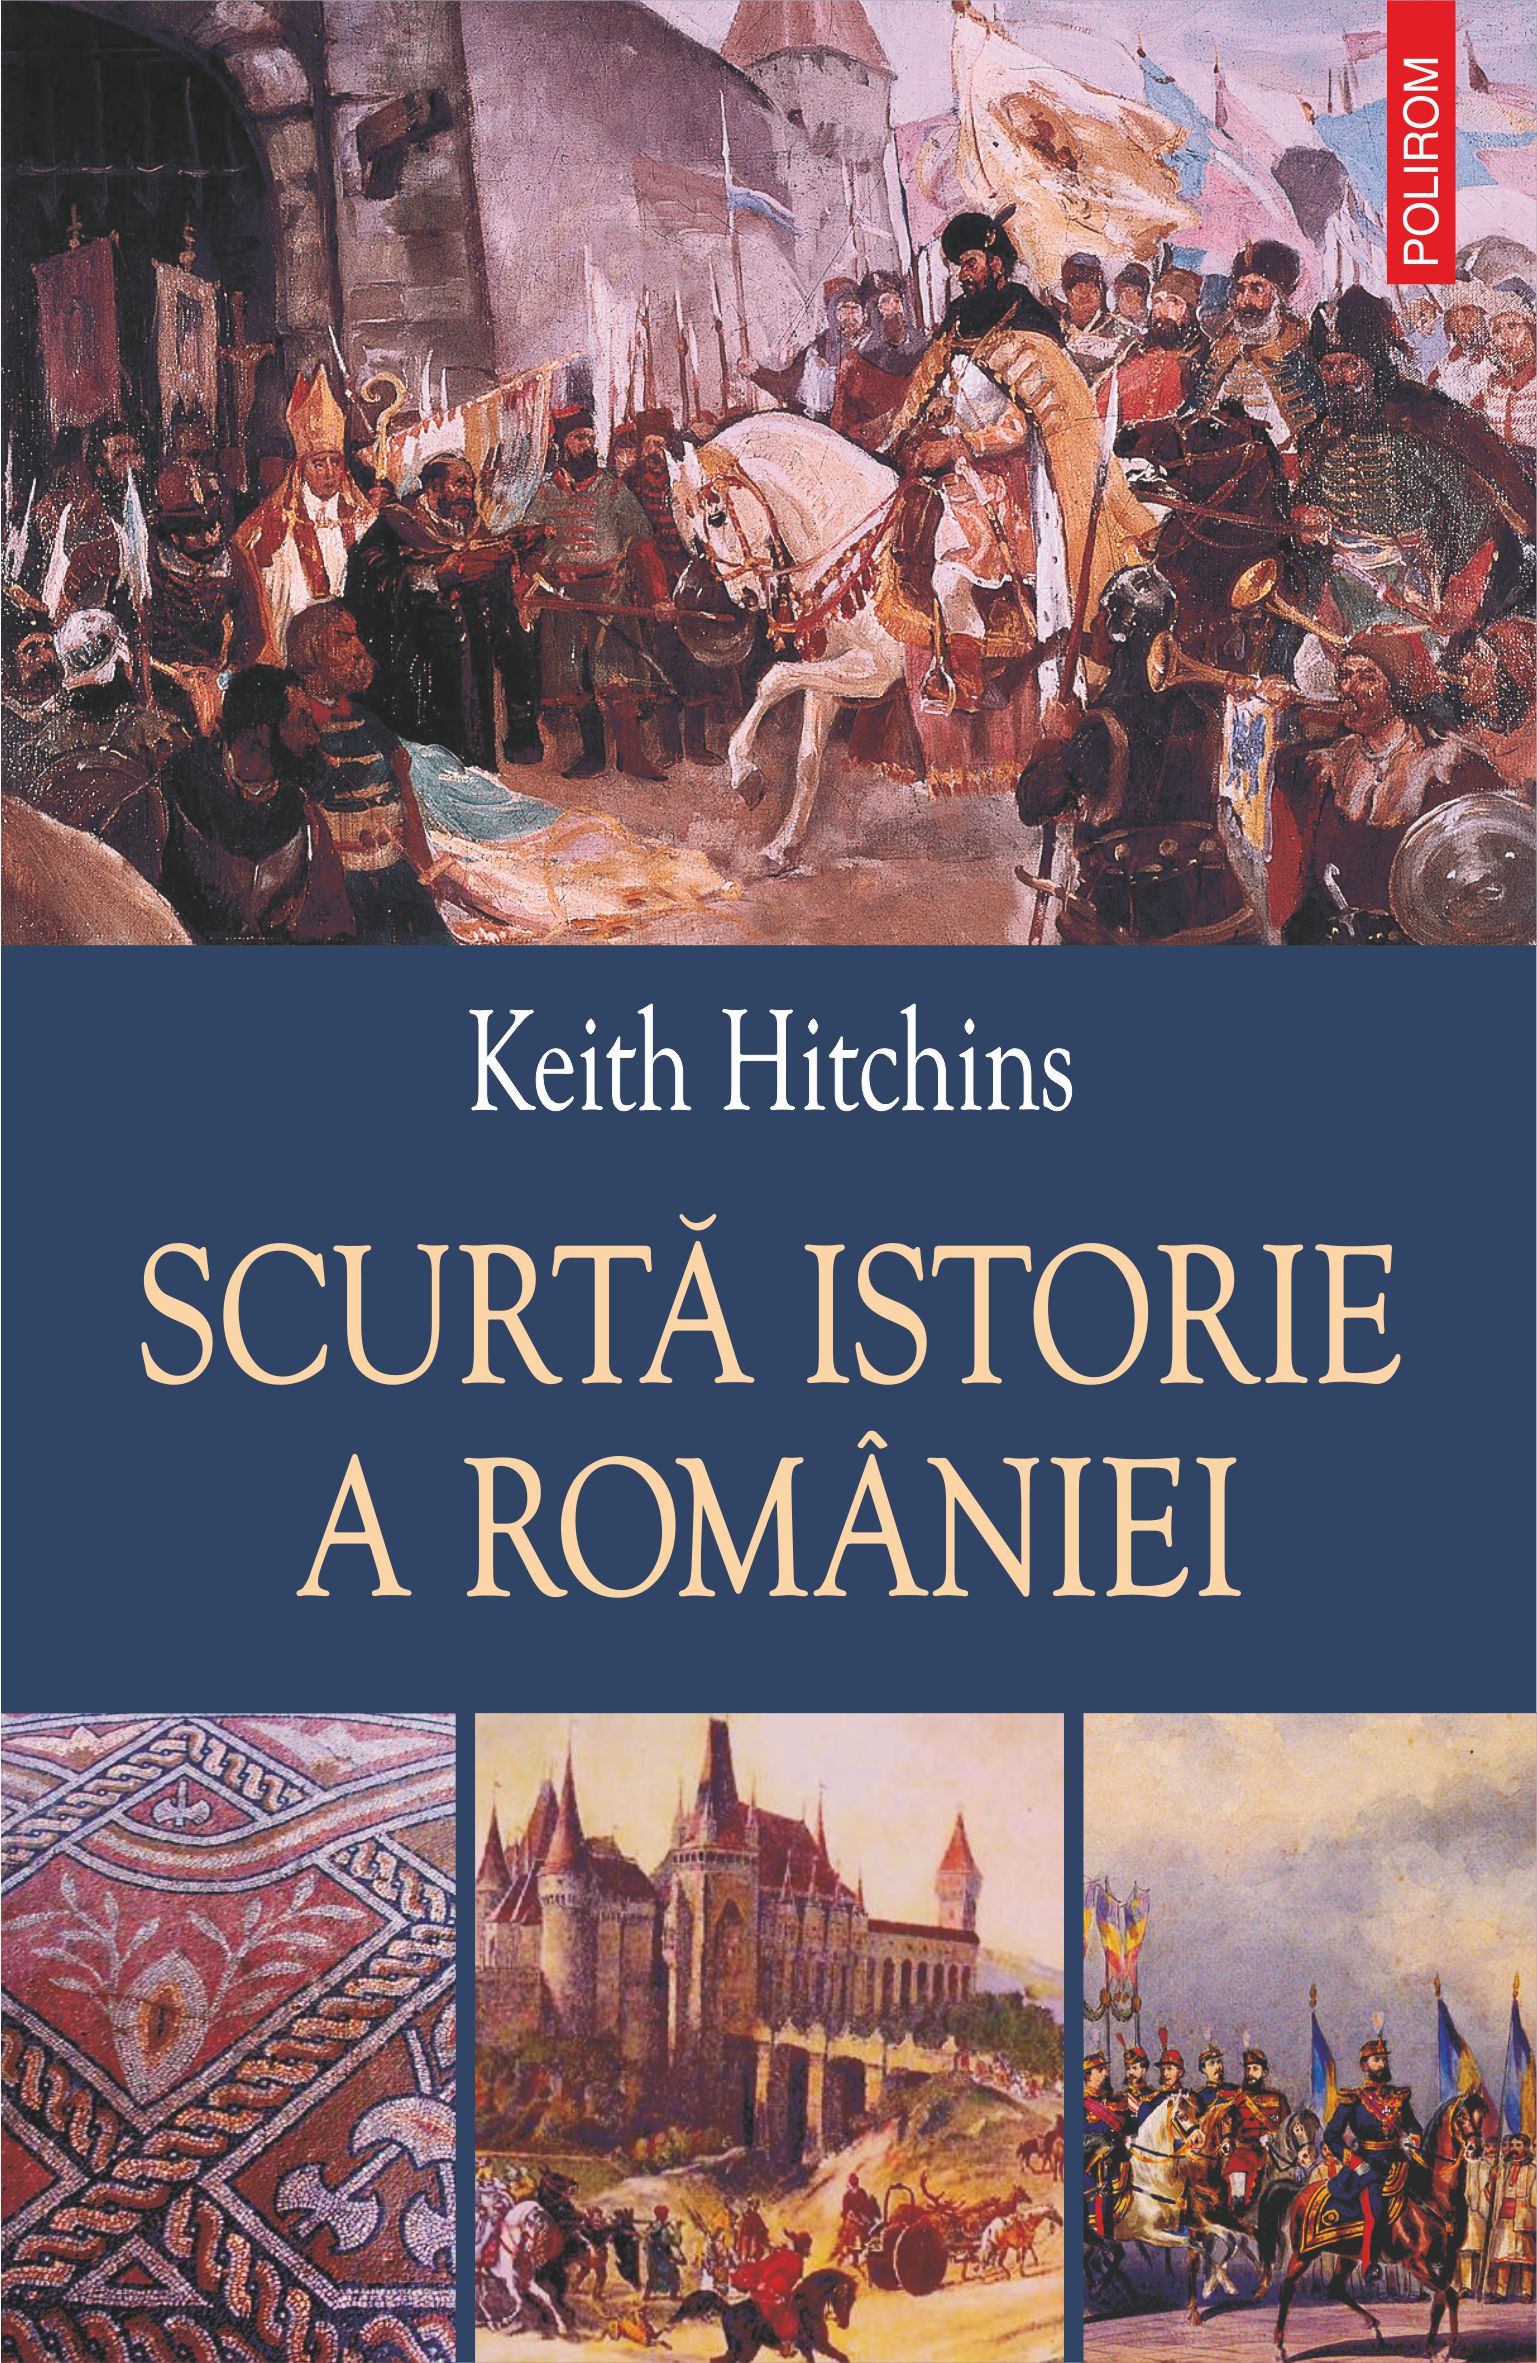 eBook Scurta istorie a Romaniei - Keith Hitchins